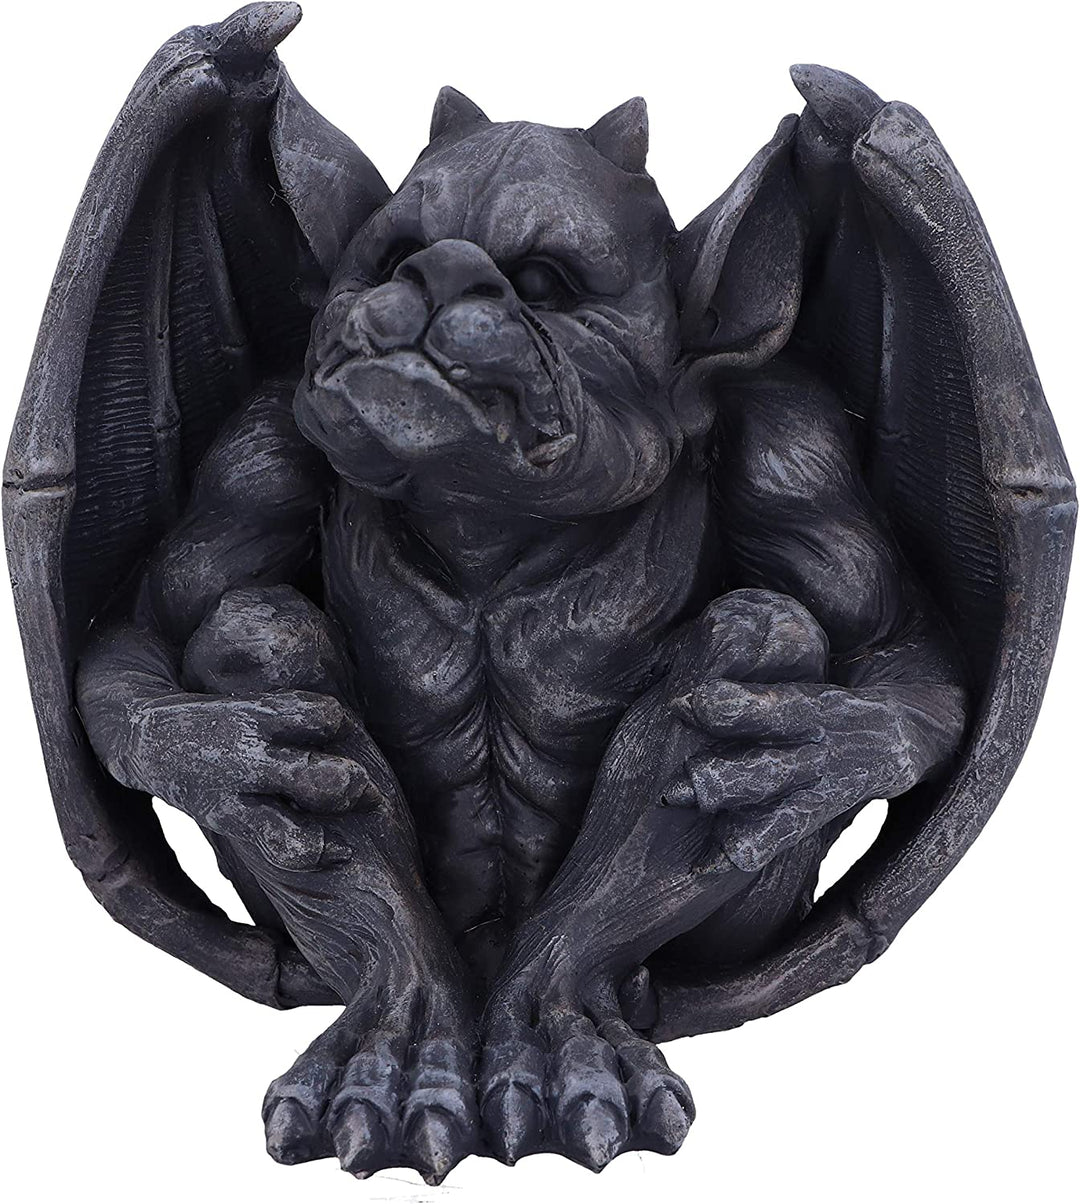 Nemesis Now Hugo Dark Black Grotesque Gargoyle Figur, 12,5 cm